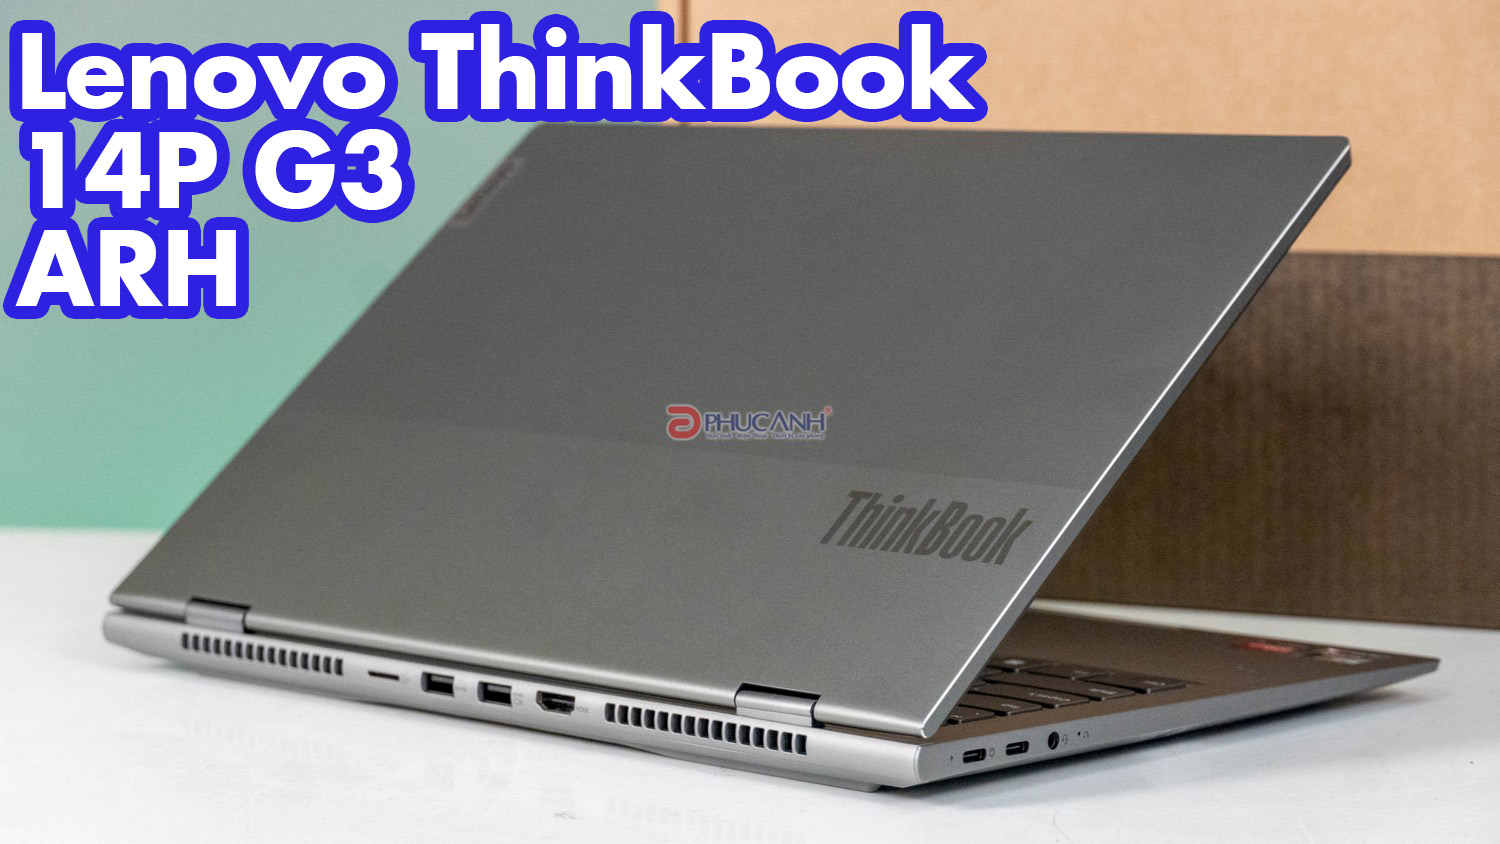 Đánh giá  Lenovo ThinkBook 14P G3 ARH